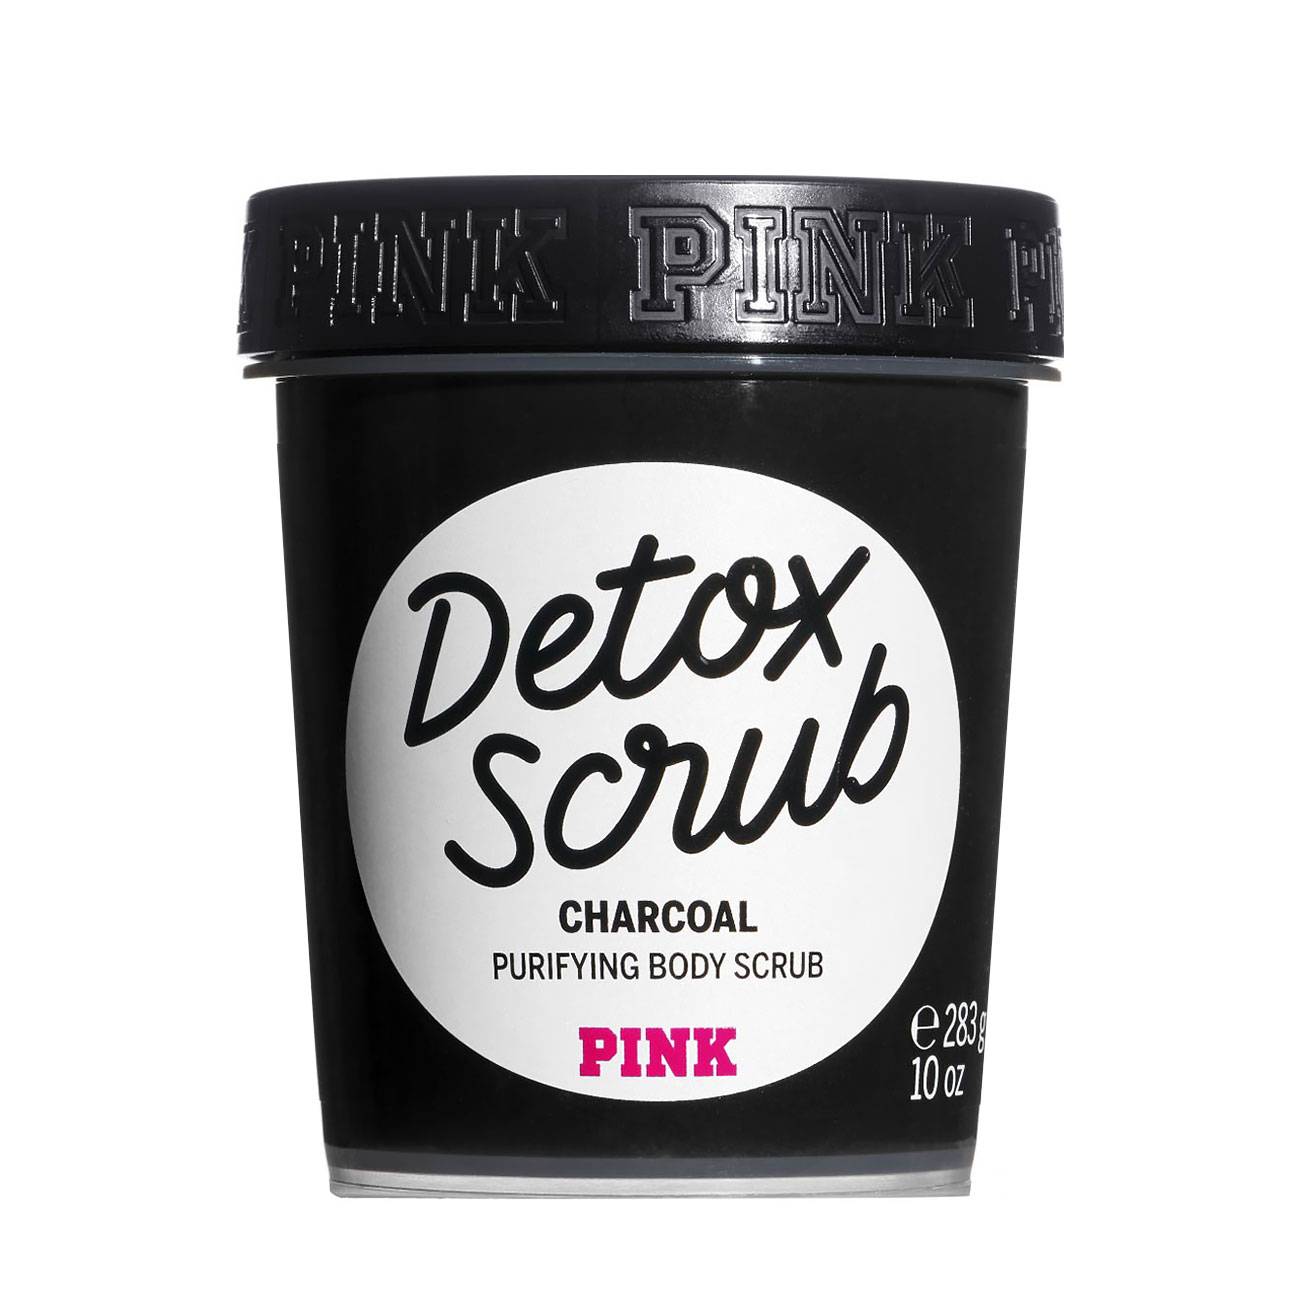 Set ingrijire corp Victoria’s Secret PINK DETOX SCRUB CHARCOAL -PURIFYING BODY SCRUB 283gr cu comanda online